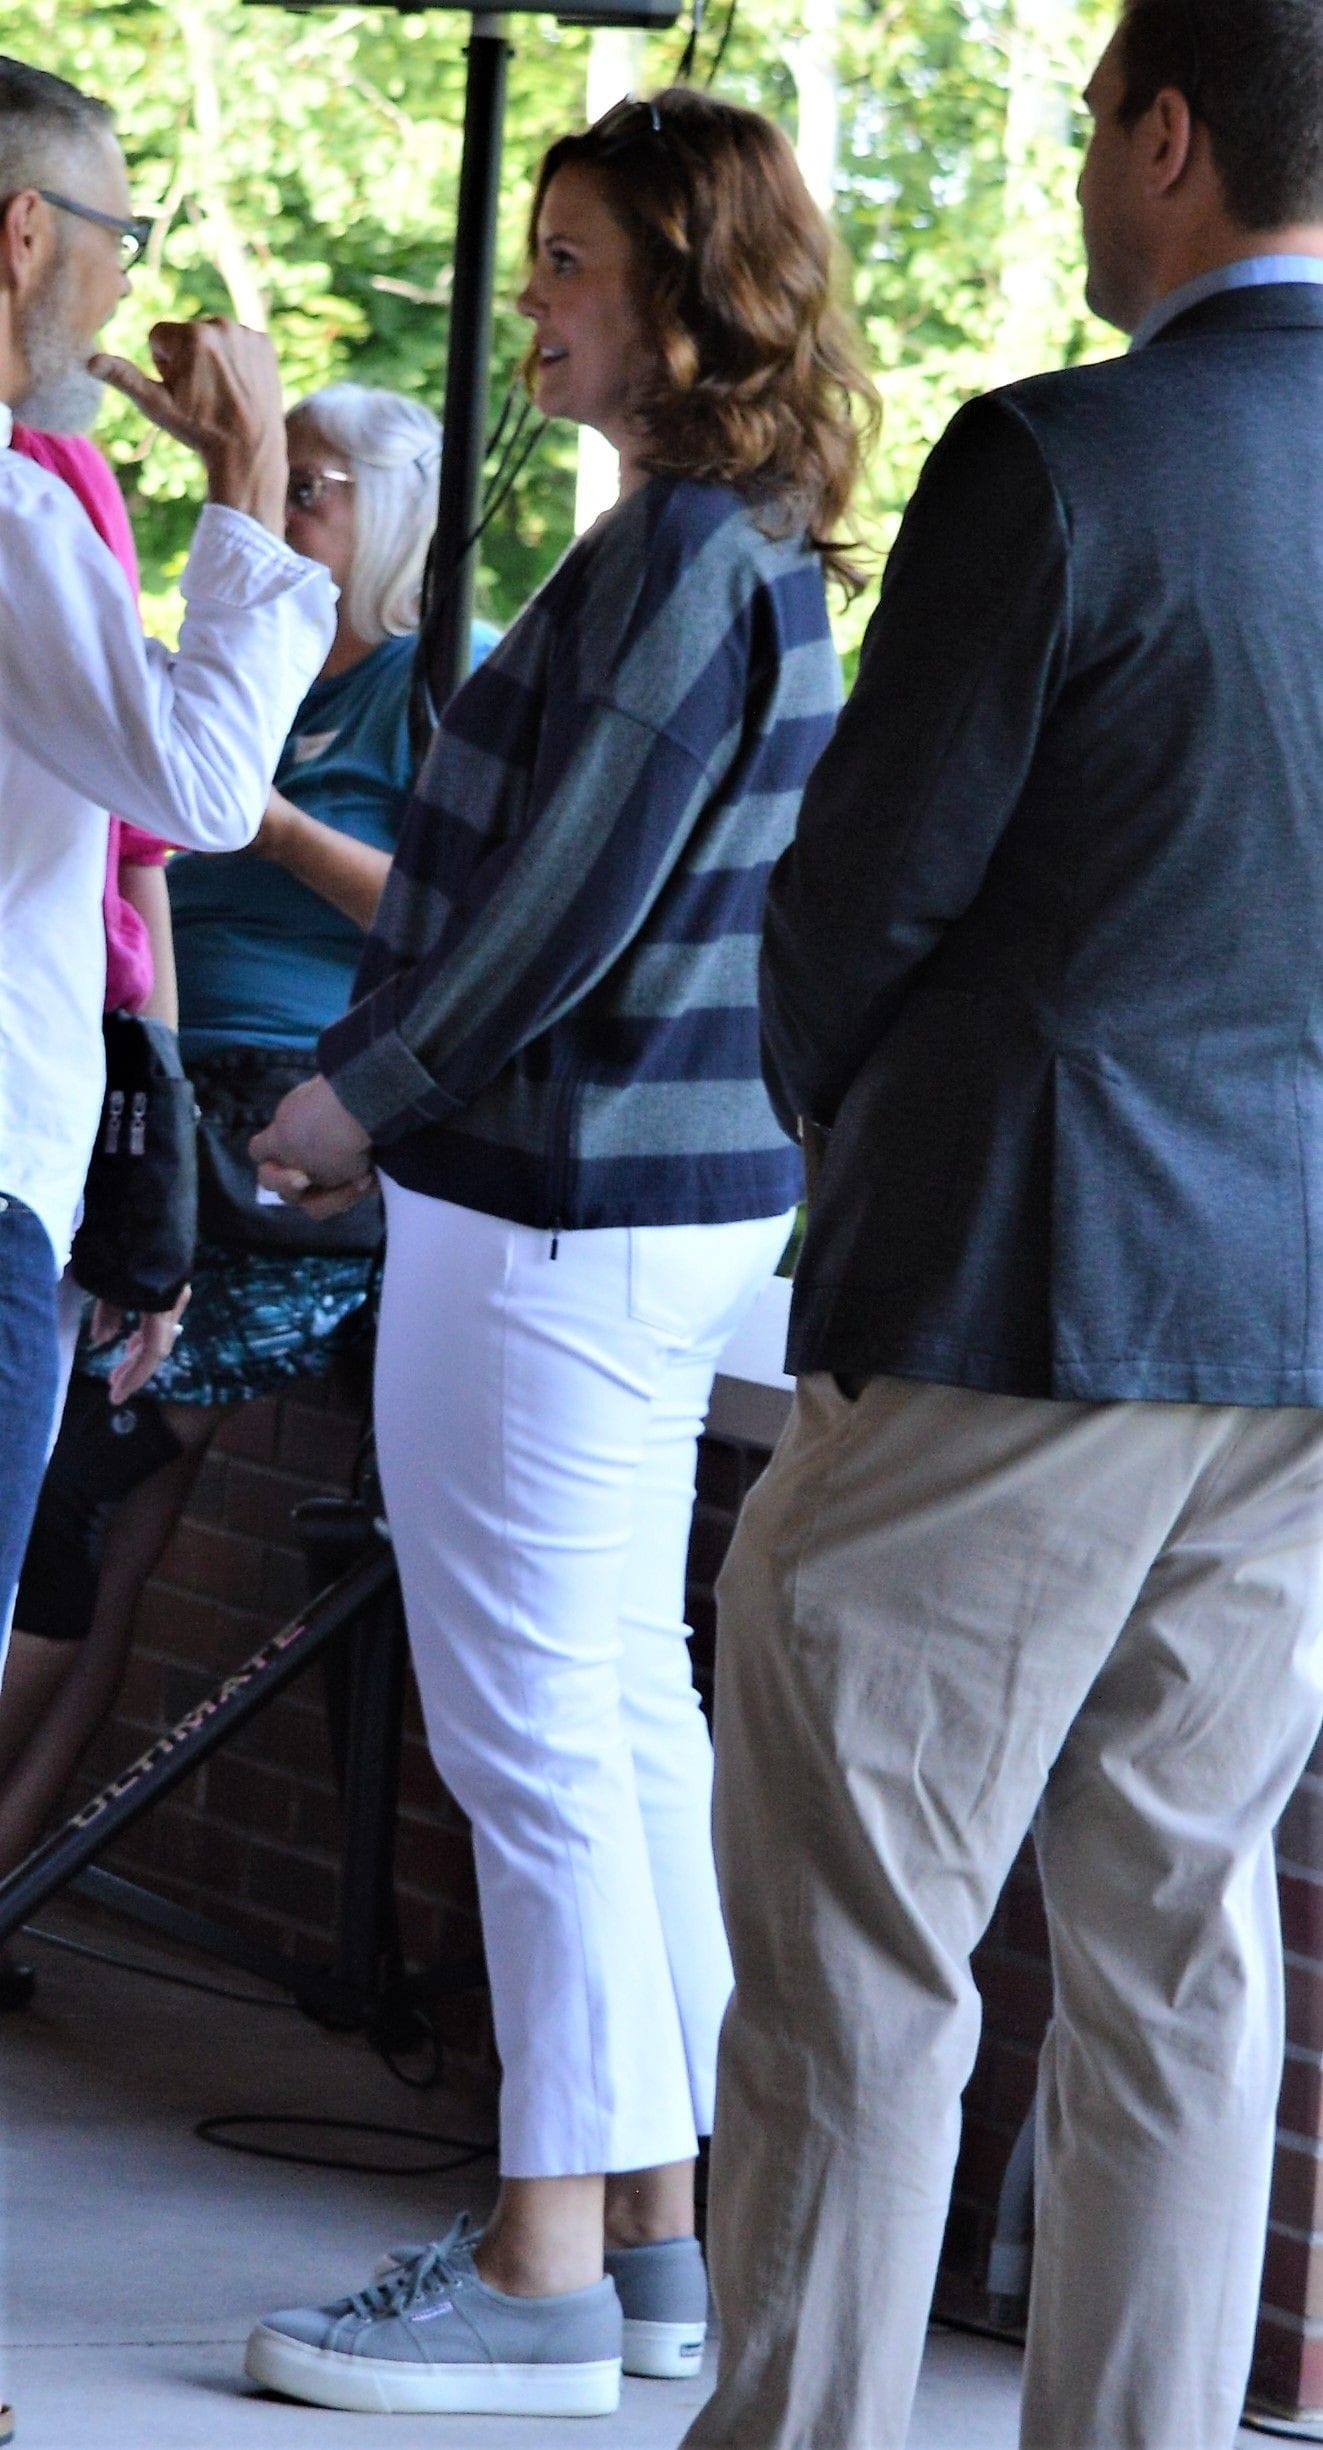 Michigan Governor Gretchen Whitmer visting with supporters at Jenn Hill fundraiser, NMU Pavilion, Marquette, Michigan, USA